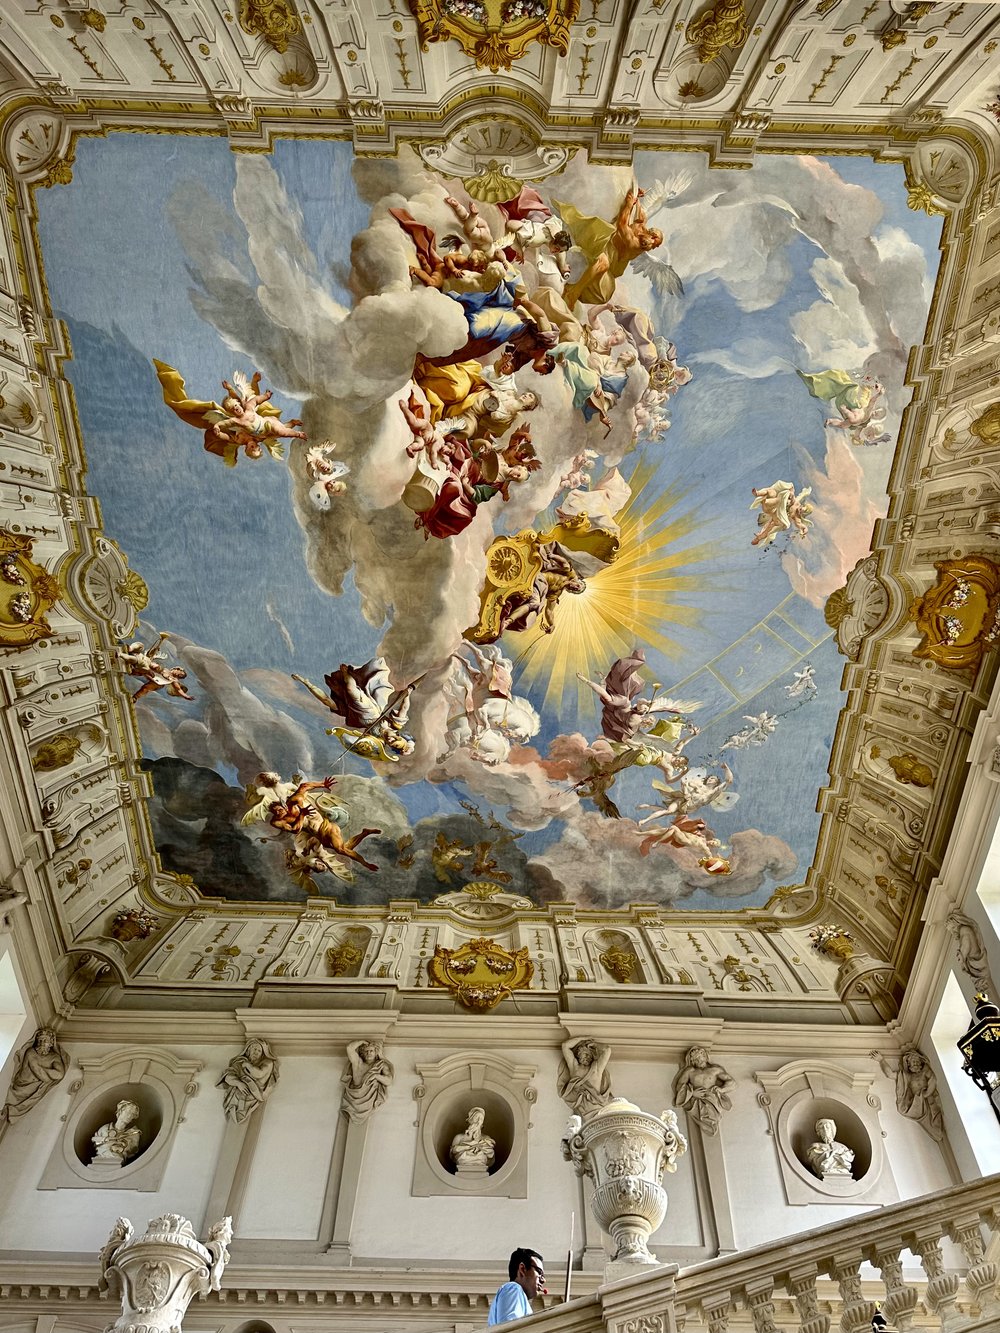 The stunning al fresco ceiling